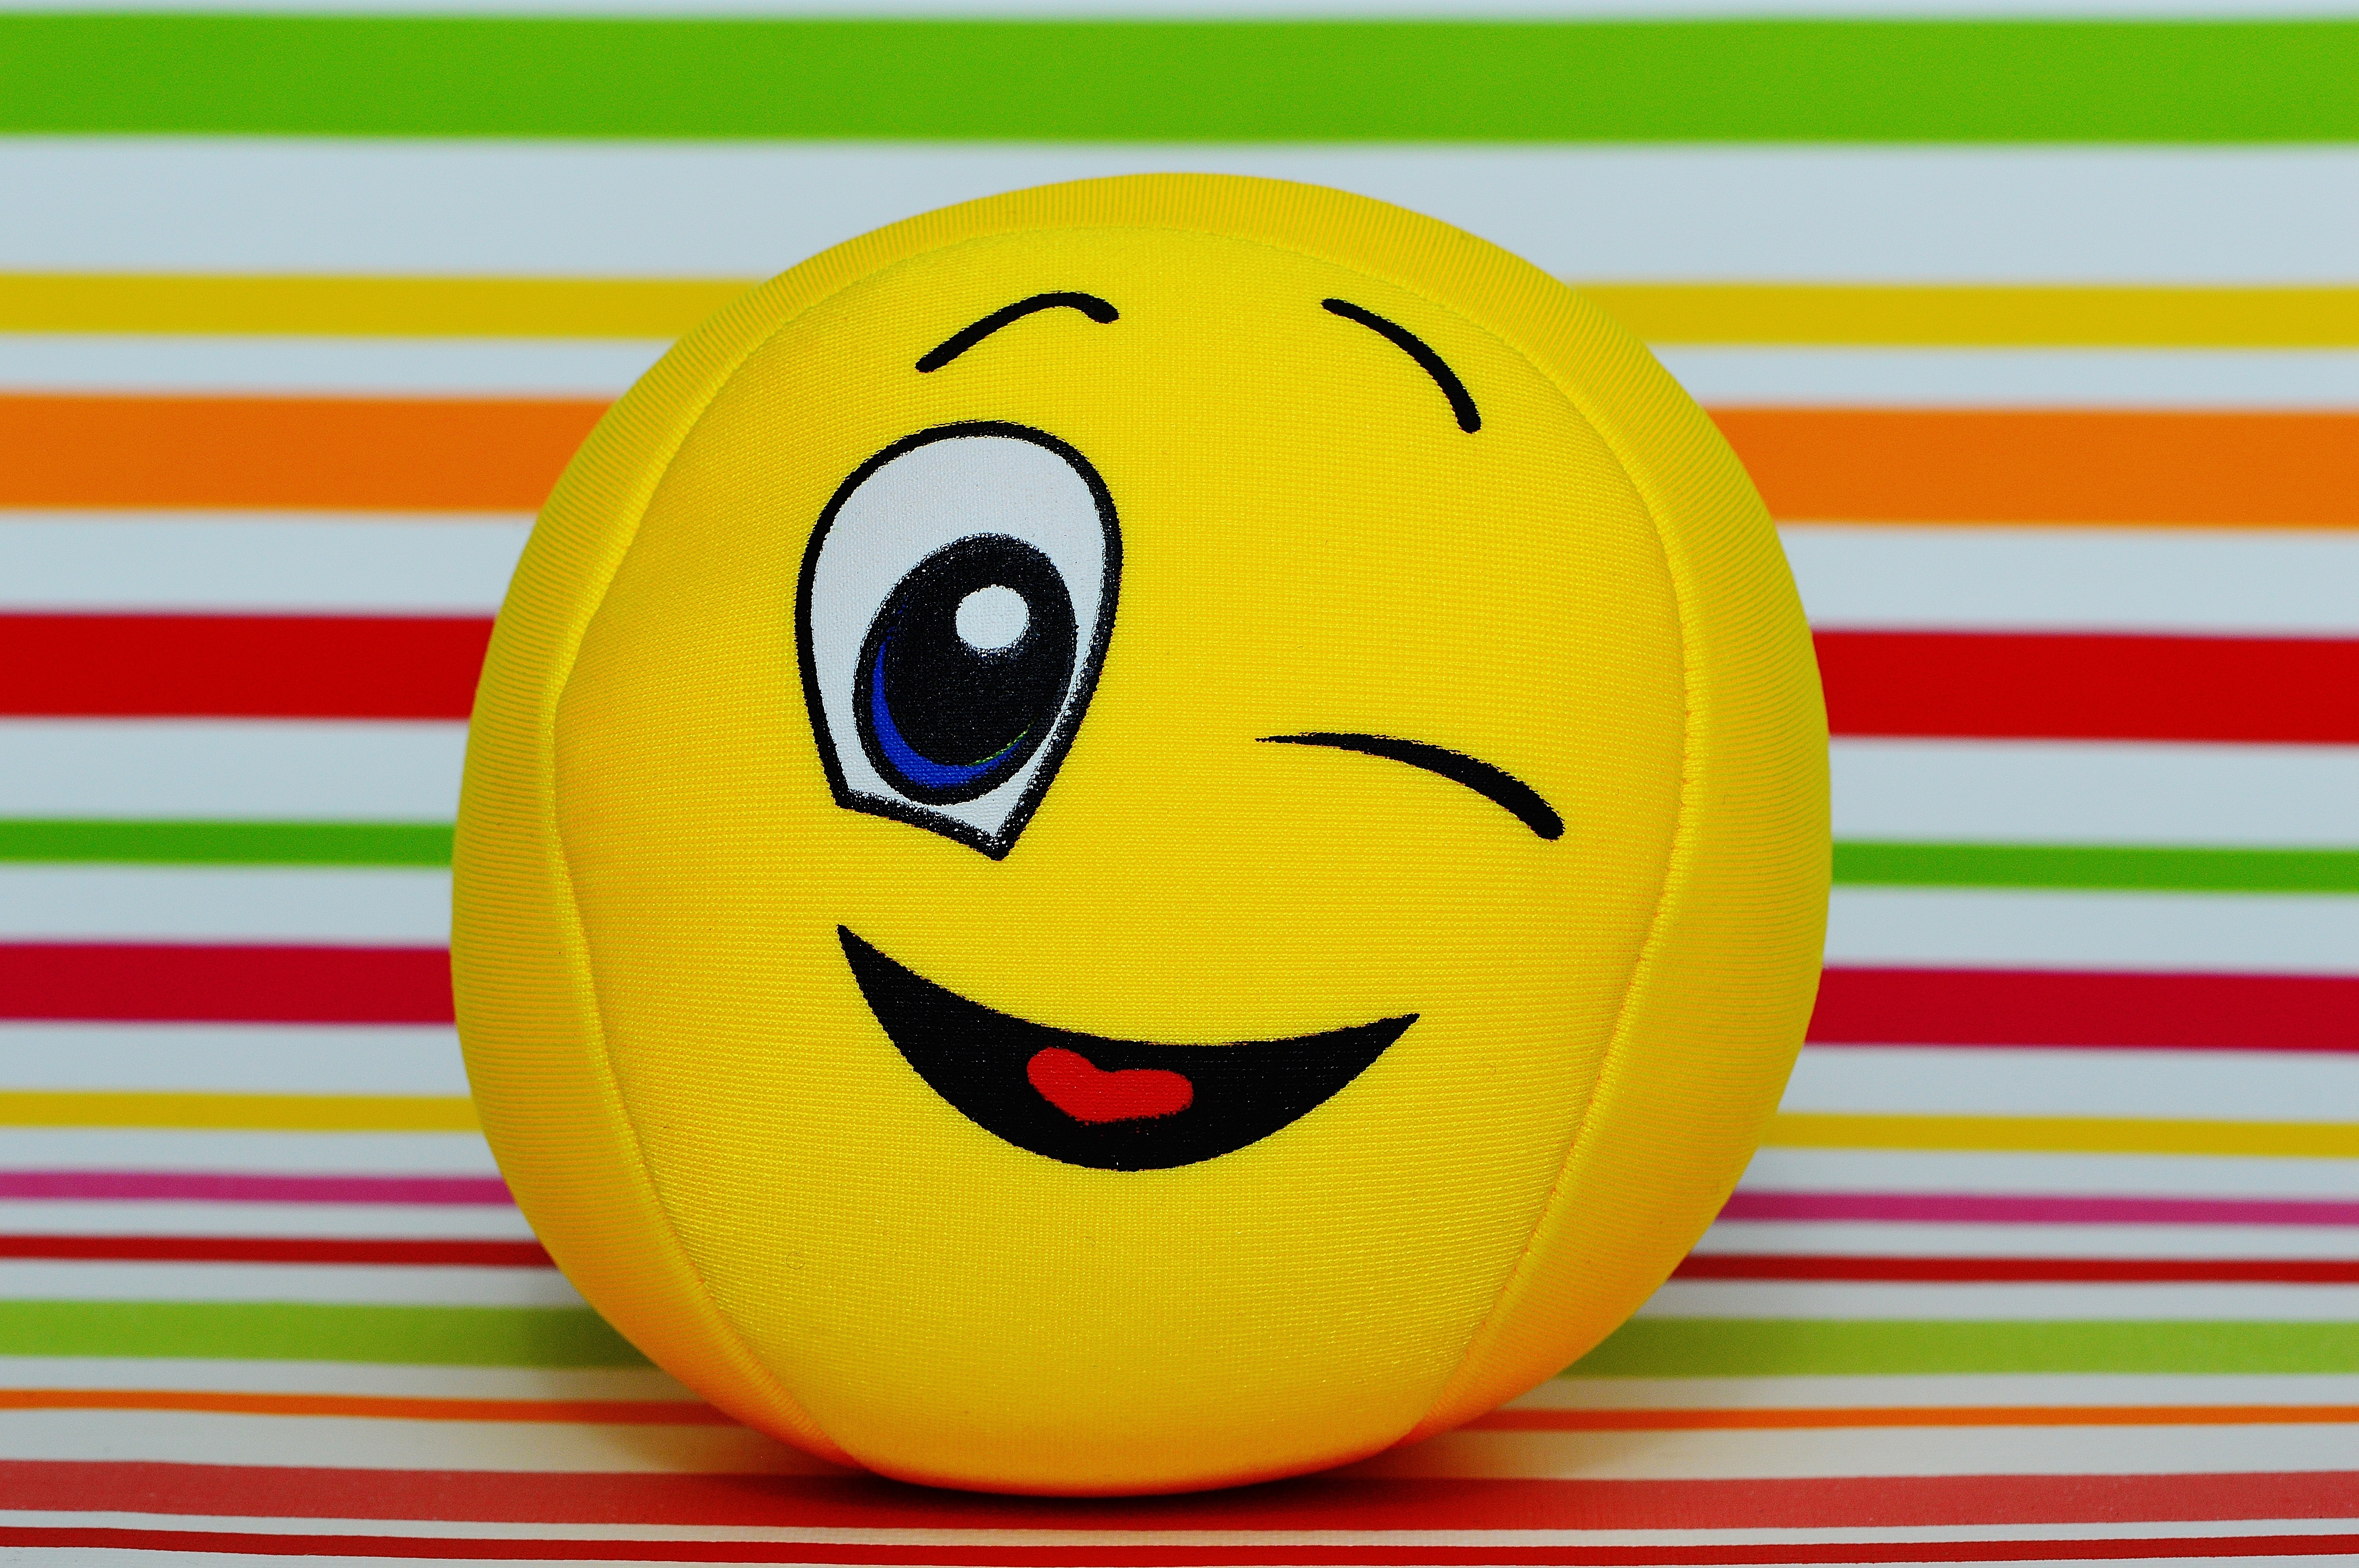 Free download winking smiley ball plush toy on concrete pavement image Peak...